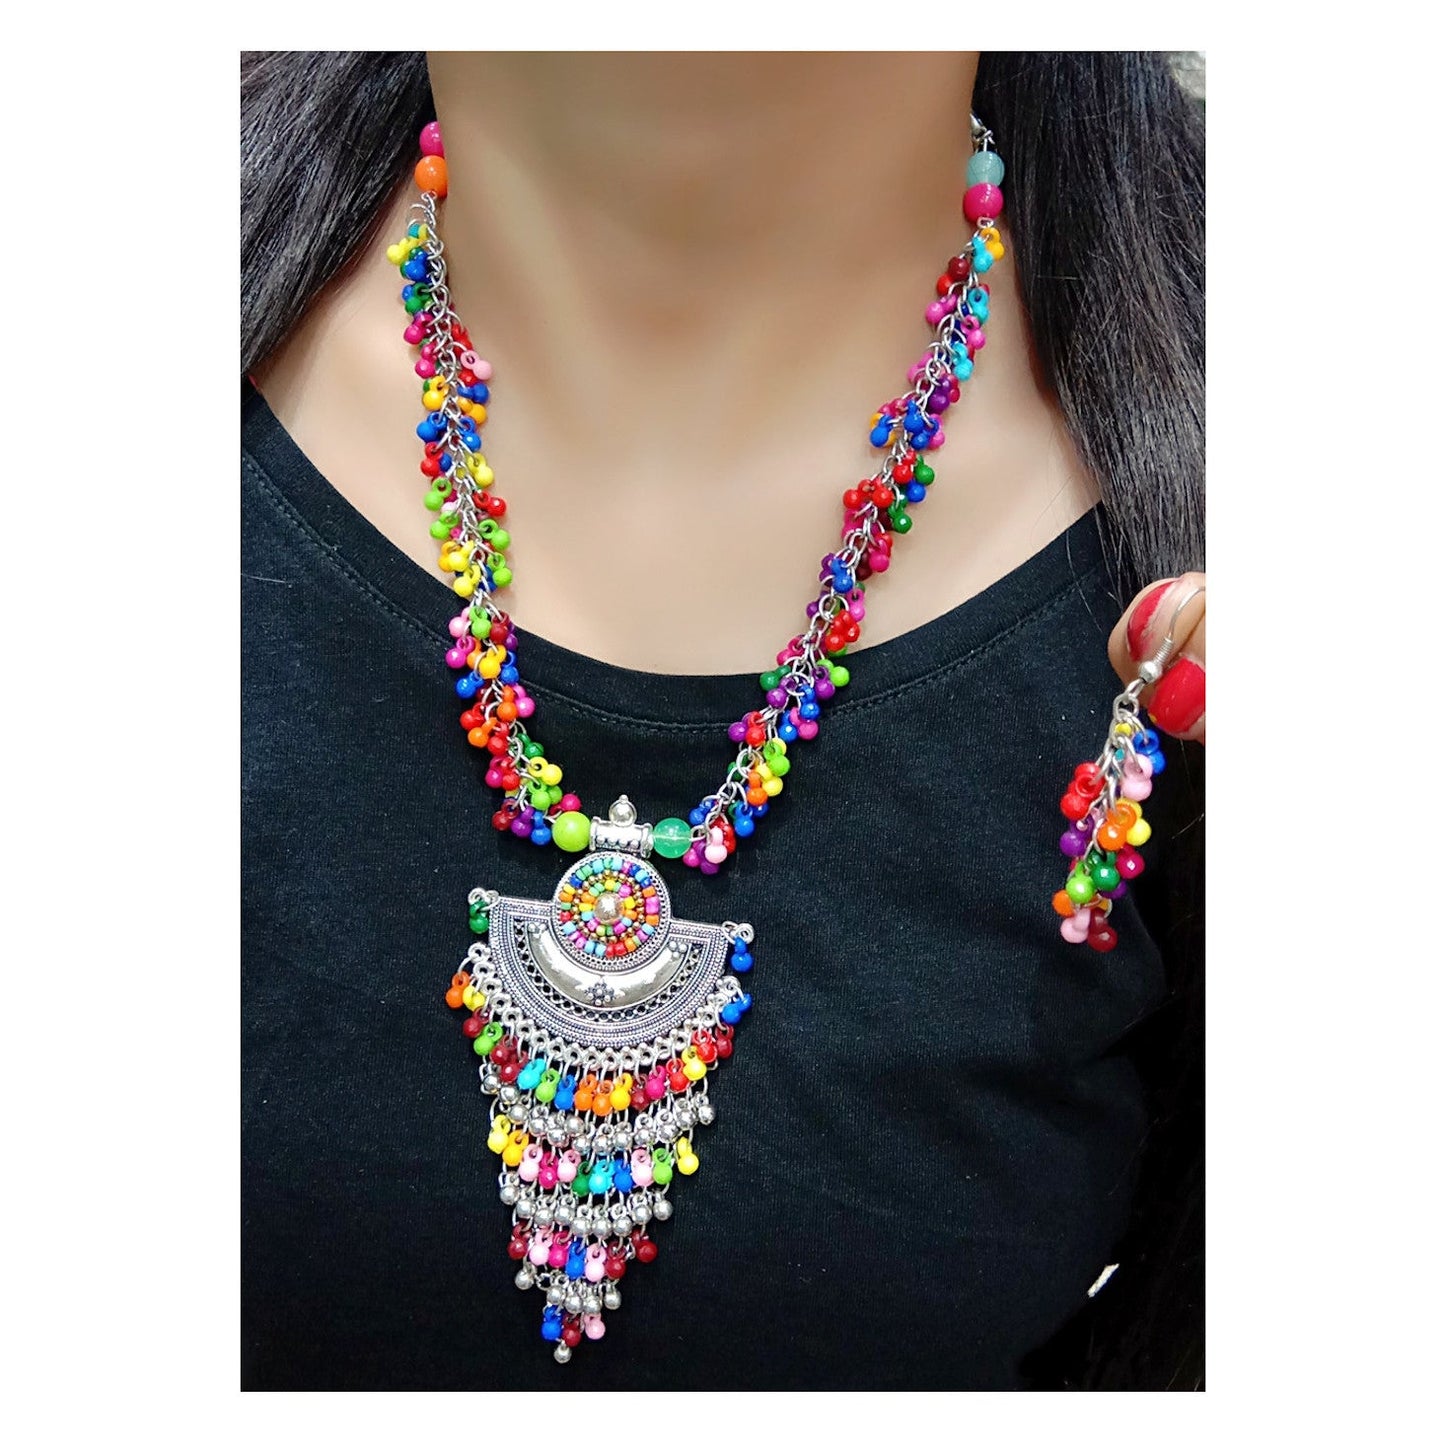 Mekkna Designed Multicolor Necklace with Earrings for Women | Buy This Jewellery Online from Mekkna